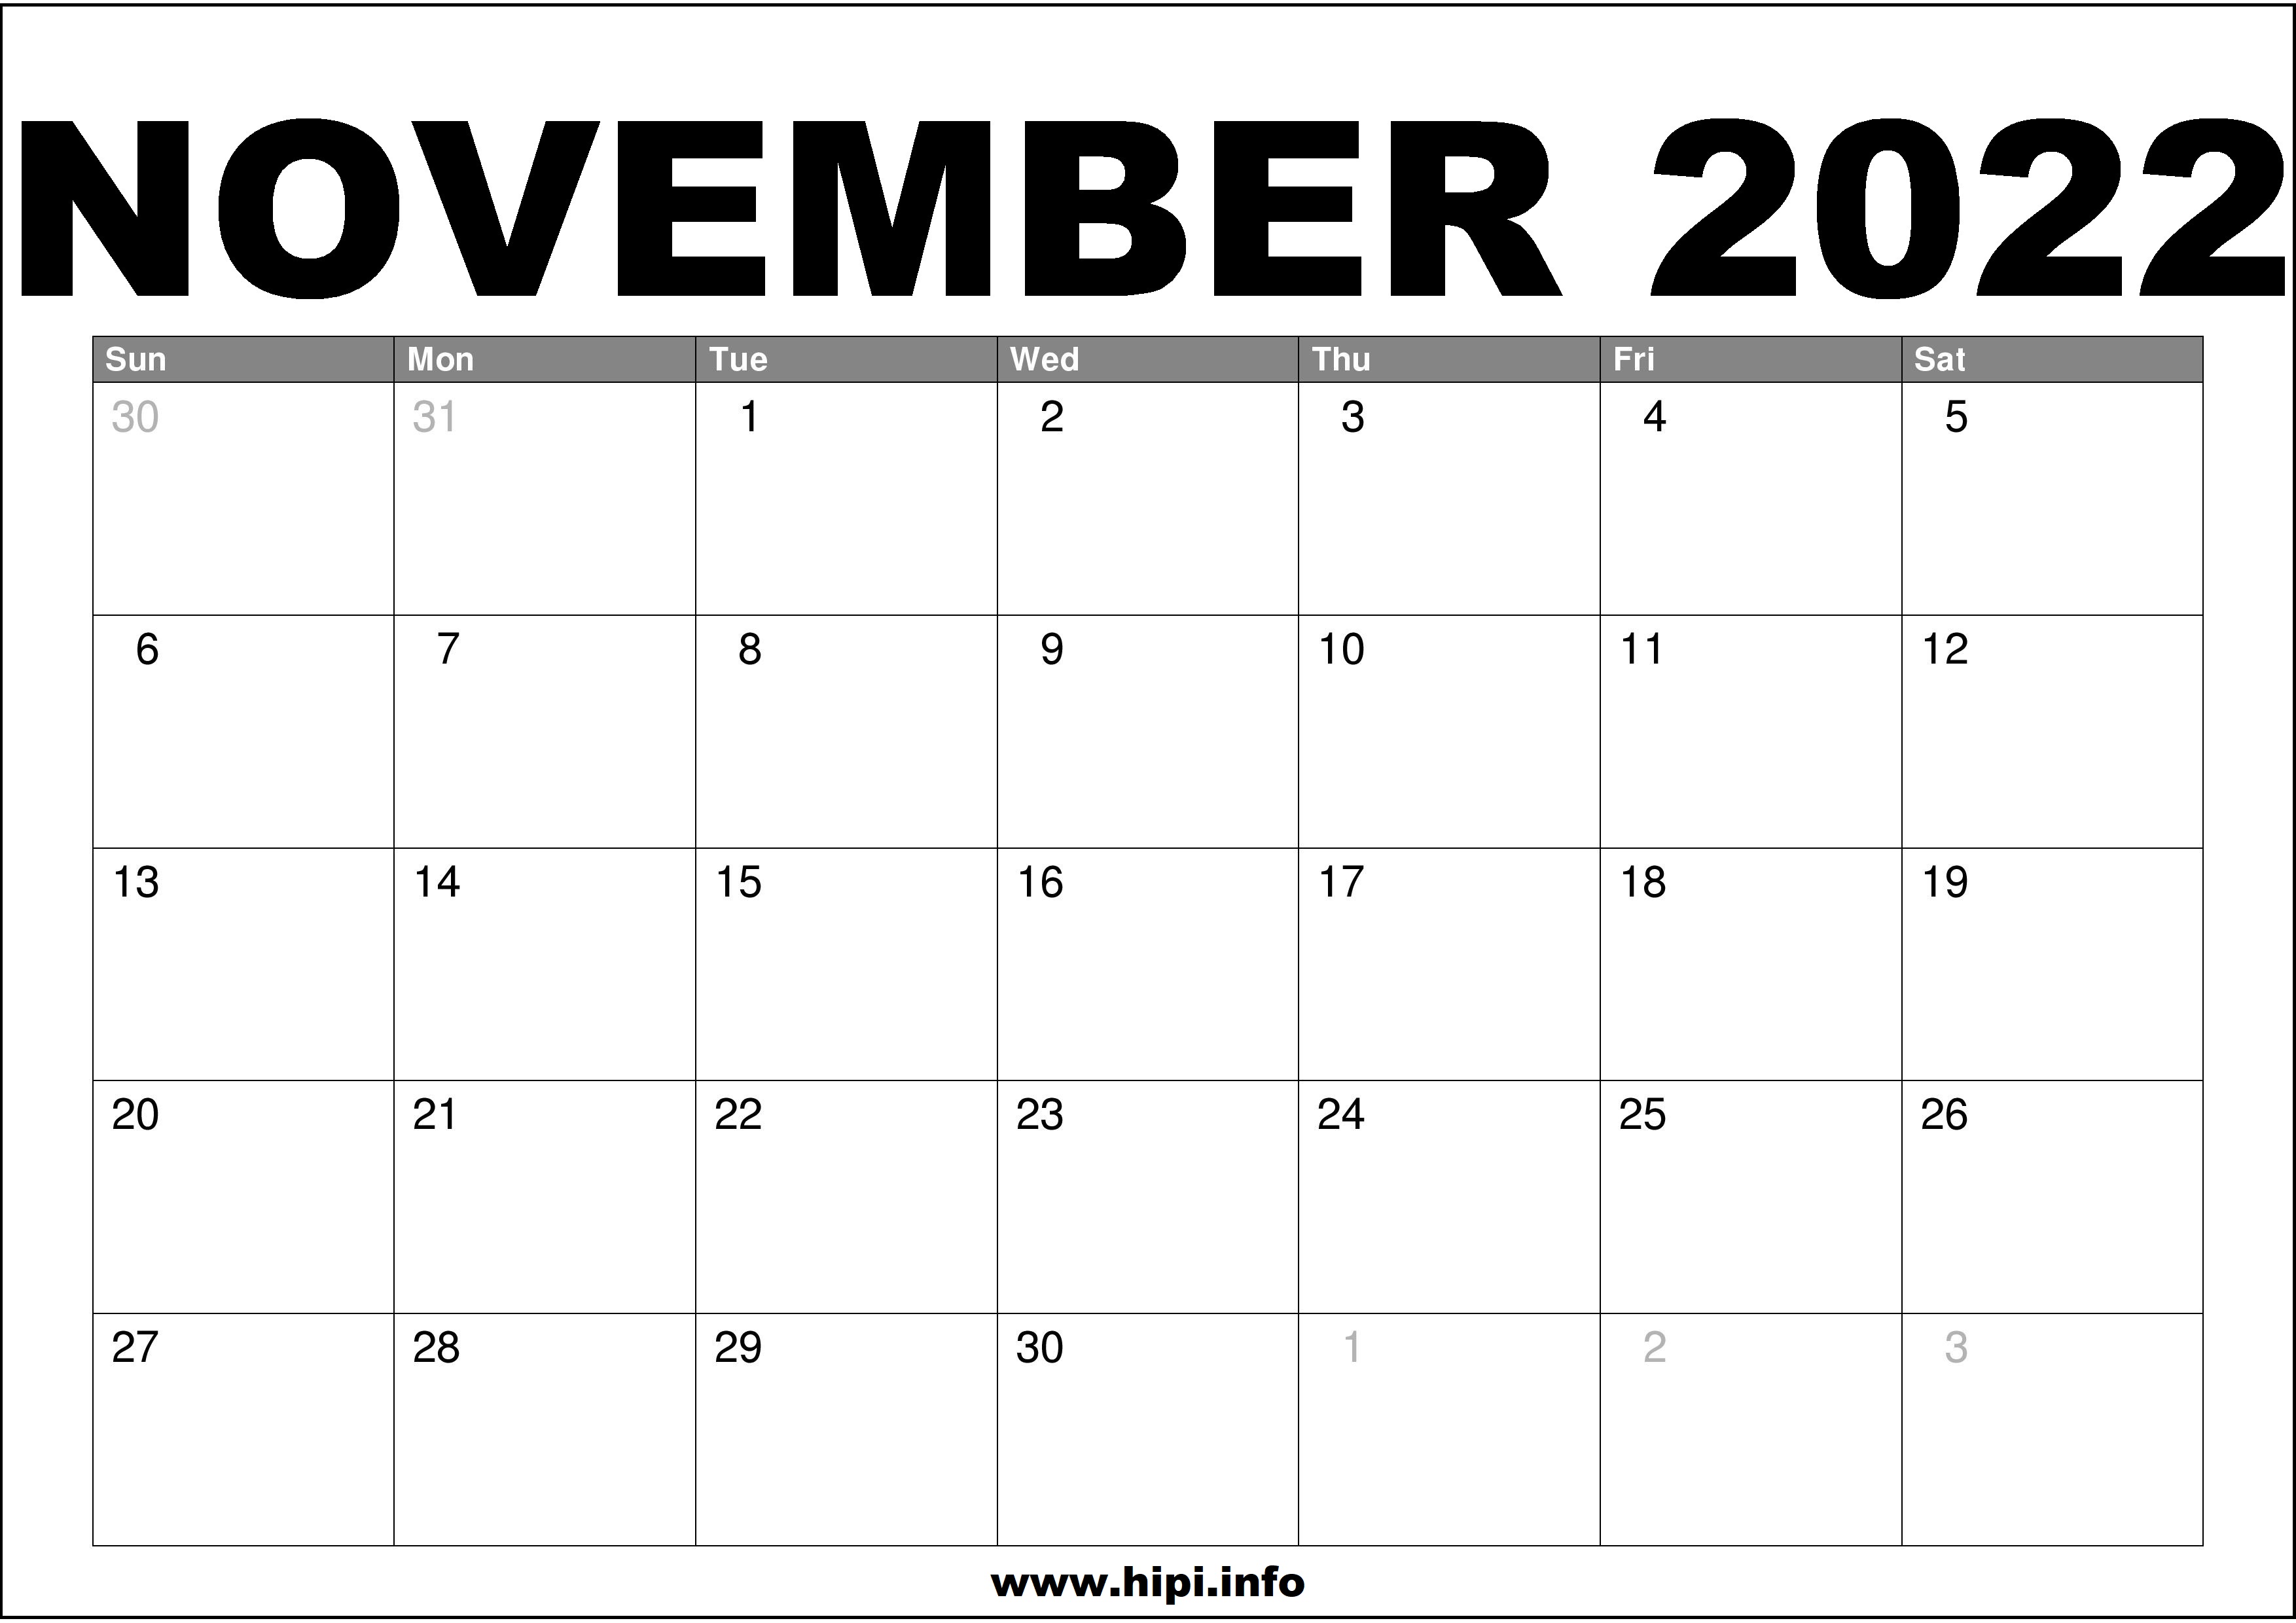 Free Calendar November 2022 November 2022 Calendar Printable Free - Hipi.info | Calendars Printable Free